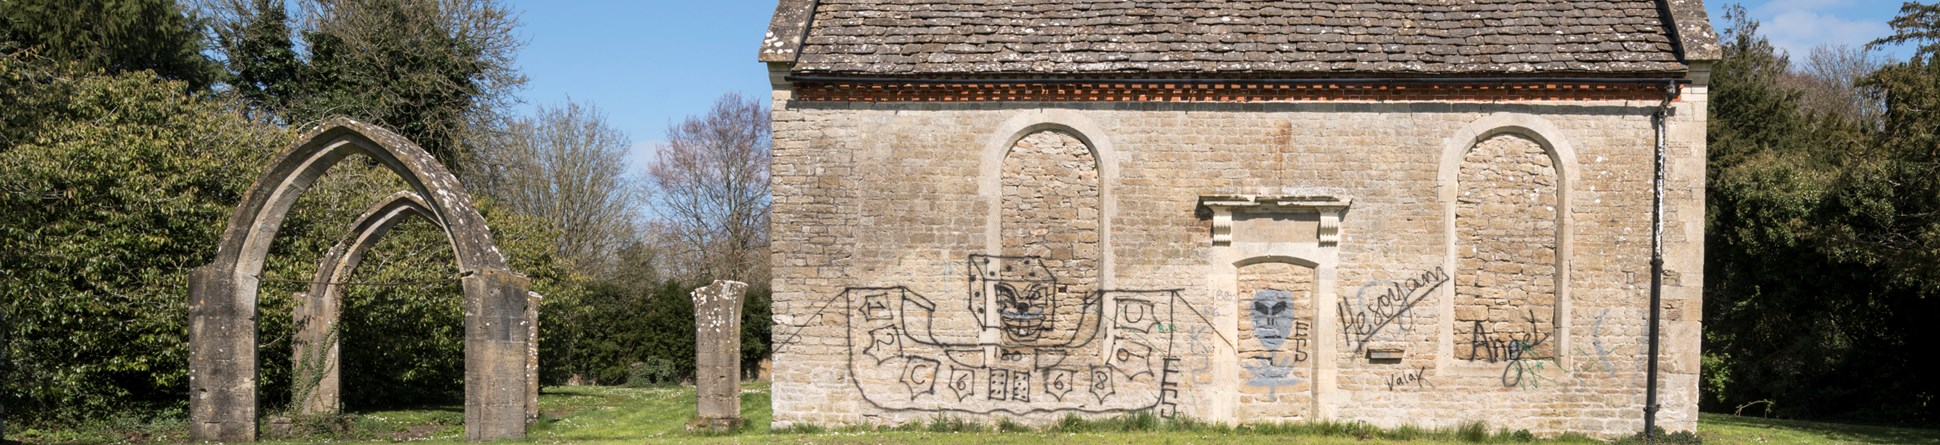 Graffiti on a church building